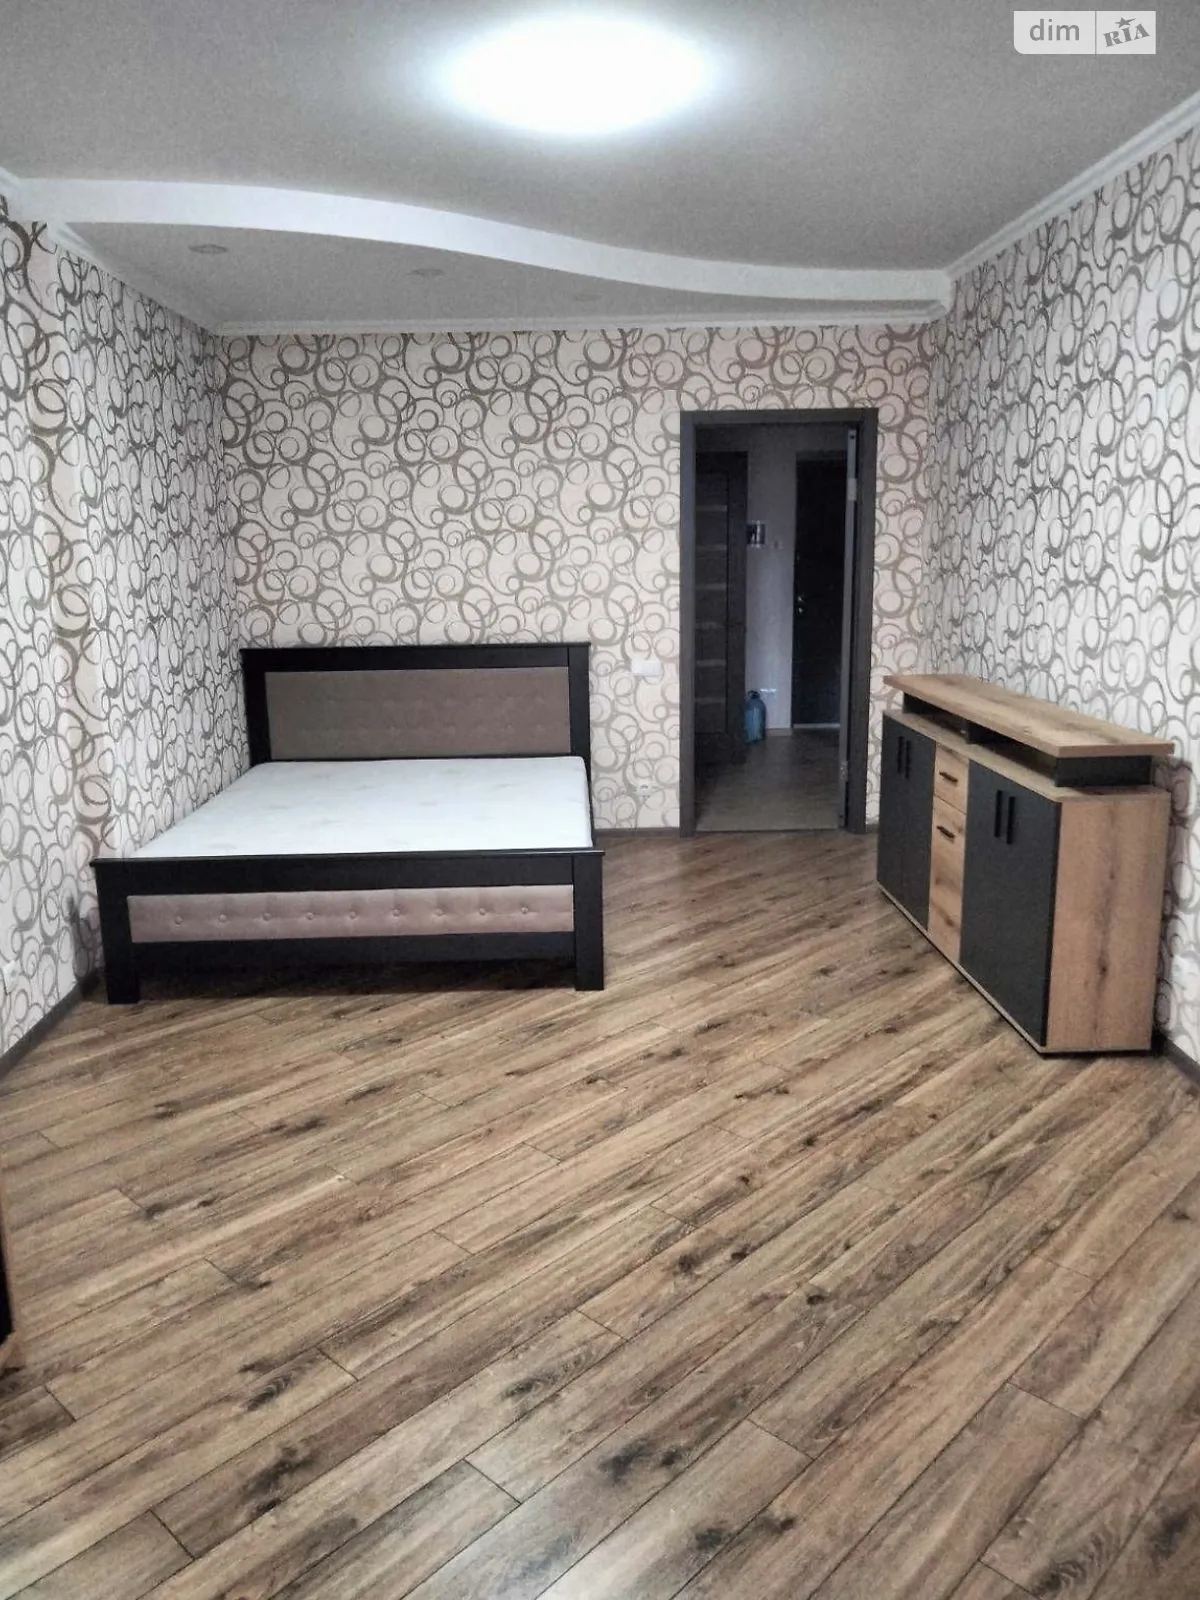 Сдается в аренду 2-комнатная квартира 60 кв. м в Виннице, ул. Вячеслава Черновола - фото 1